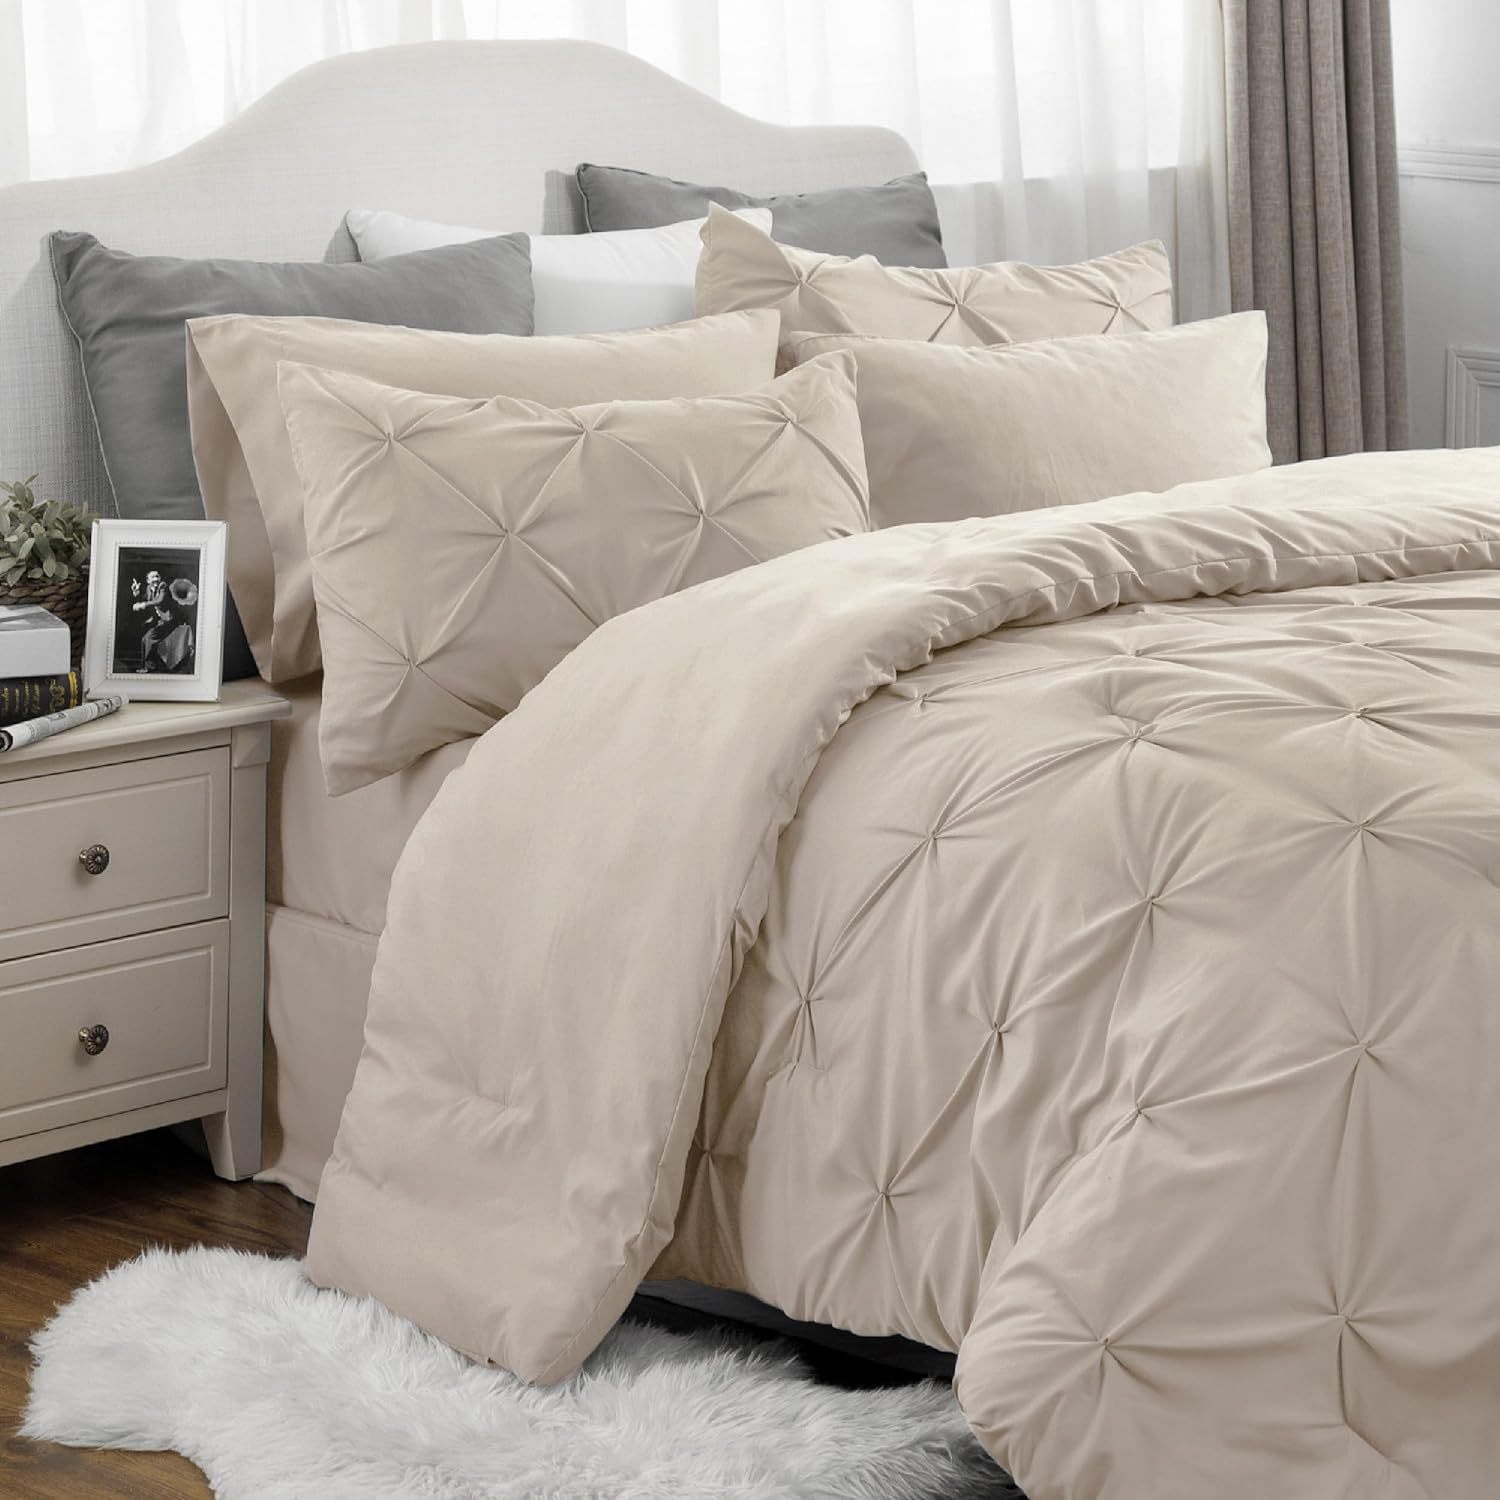 

5pcs/ 7pcs Comforter Set - Bed Set, Pinch Pleat Bedding Set With Comforter, Sheets, Pillowcases & Shams